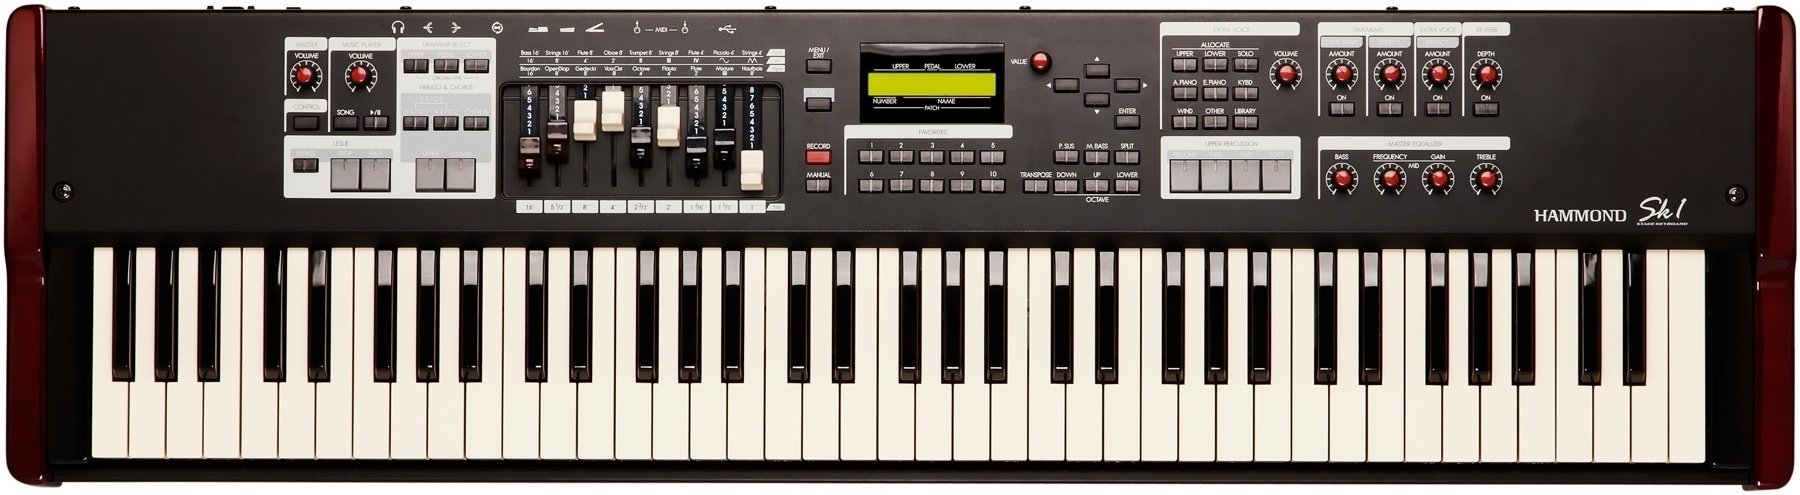 Electronic Organ Hammond SK1-73